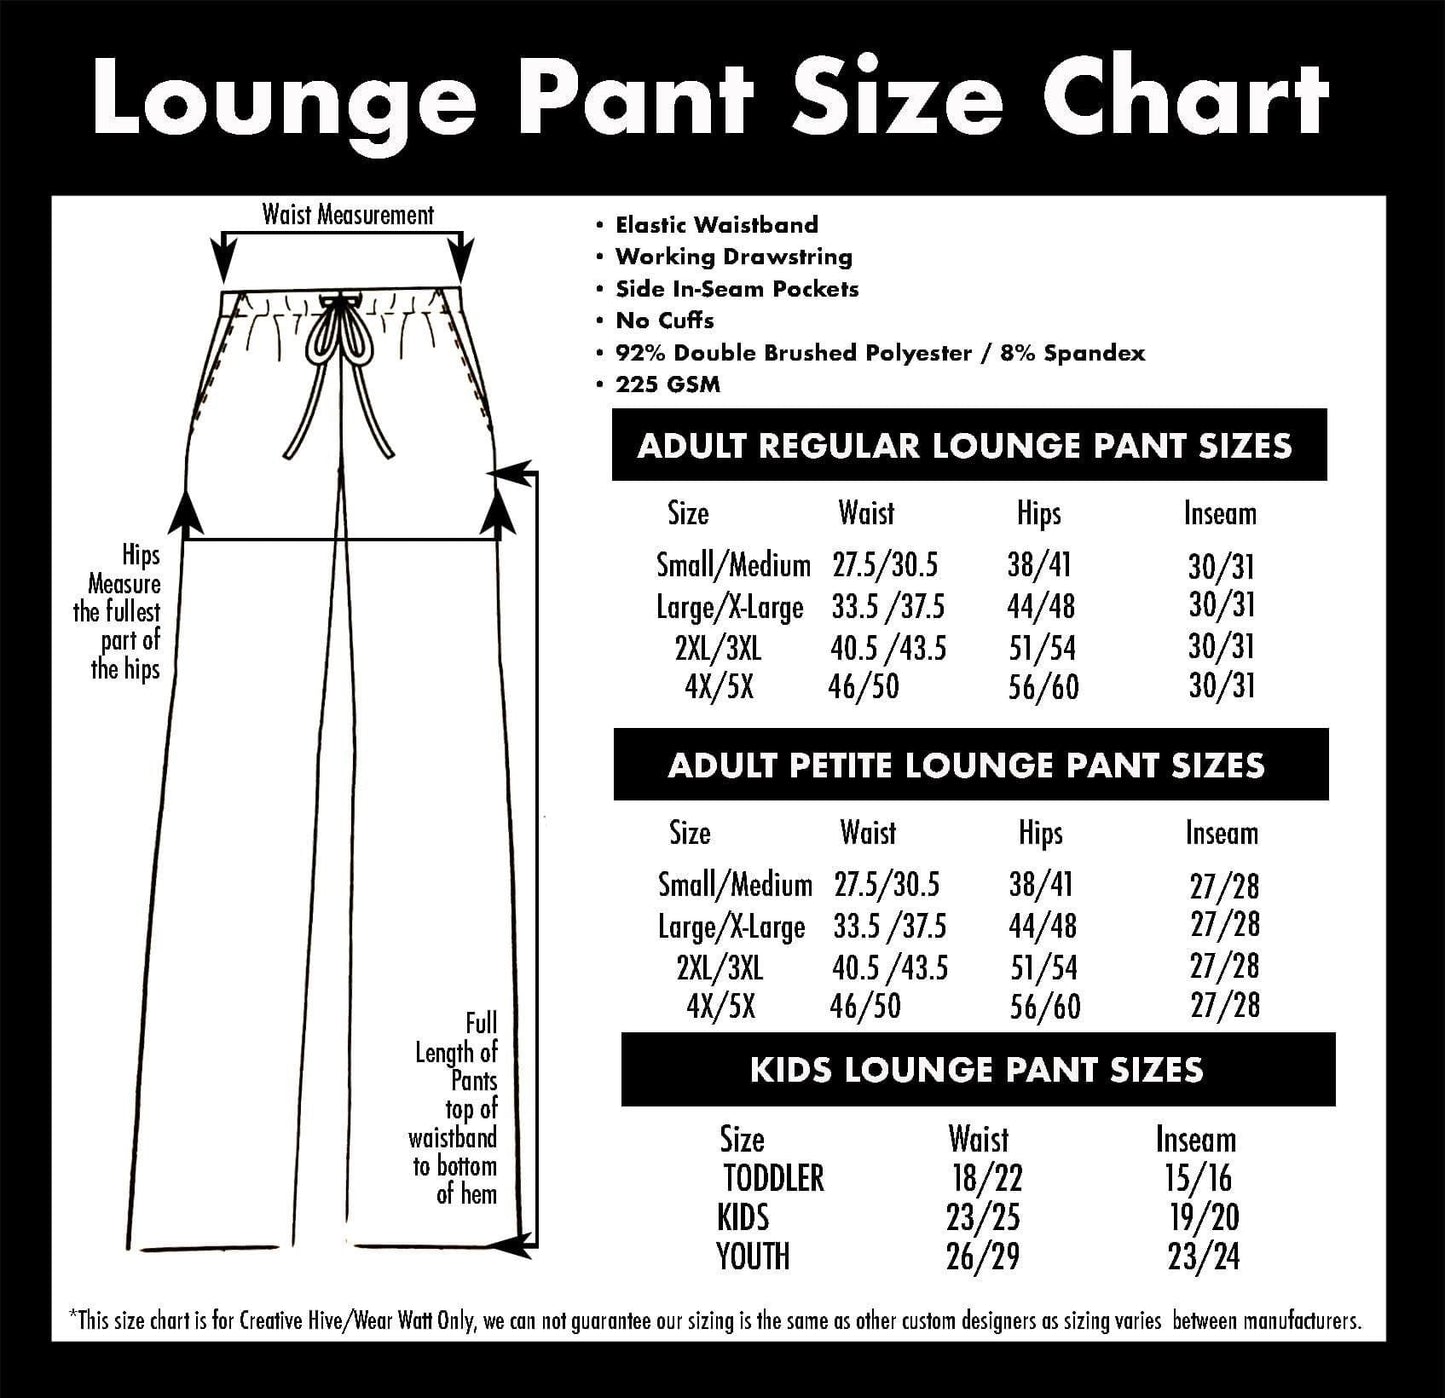 Vintage Skulls - Lounge Pants